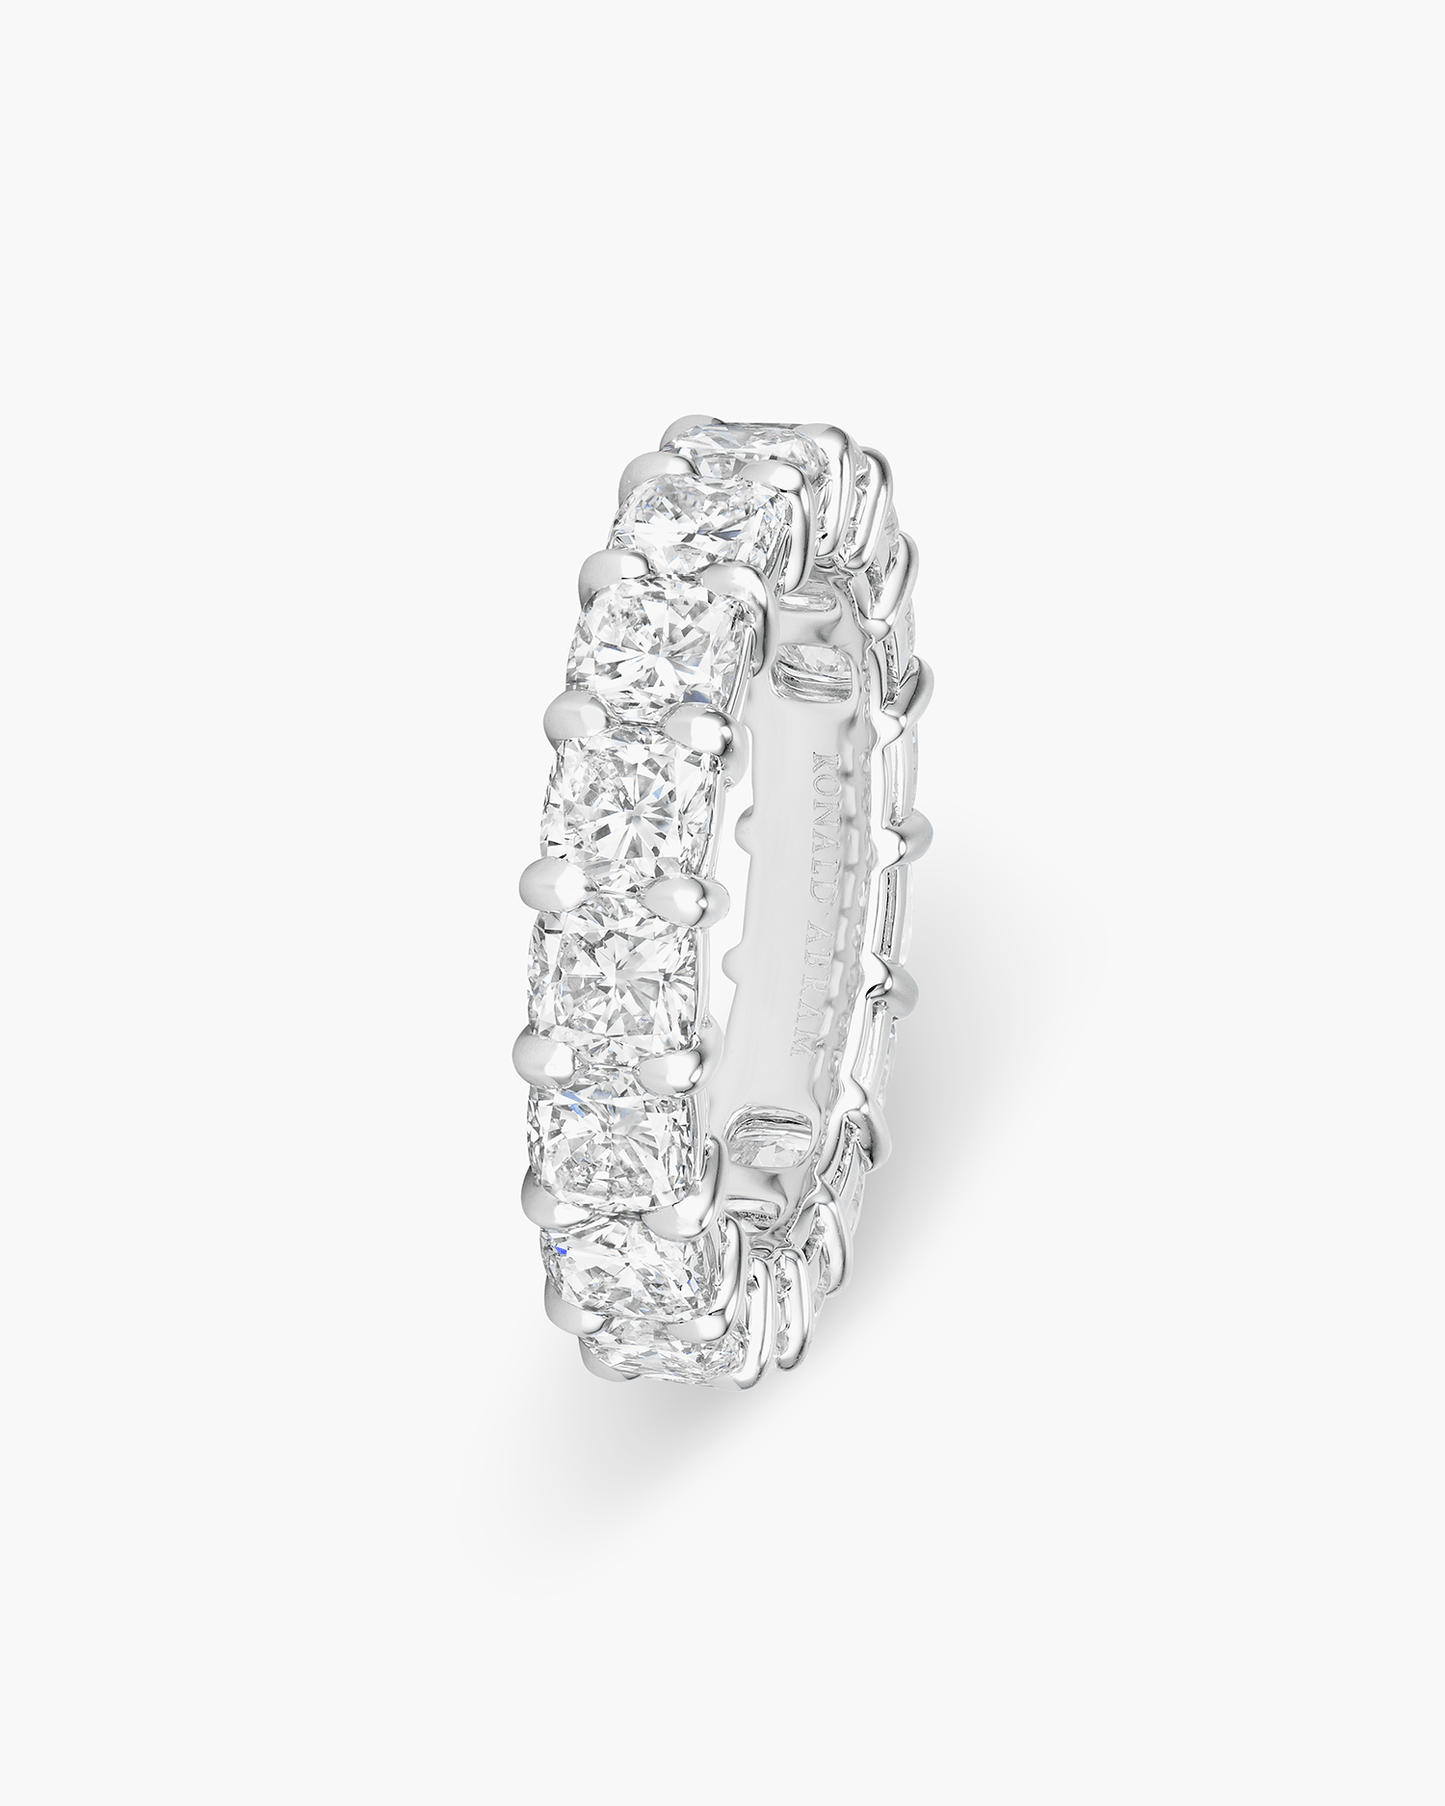 Cushion Cut Diamond Eternity Ring (0.30 carat)